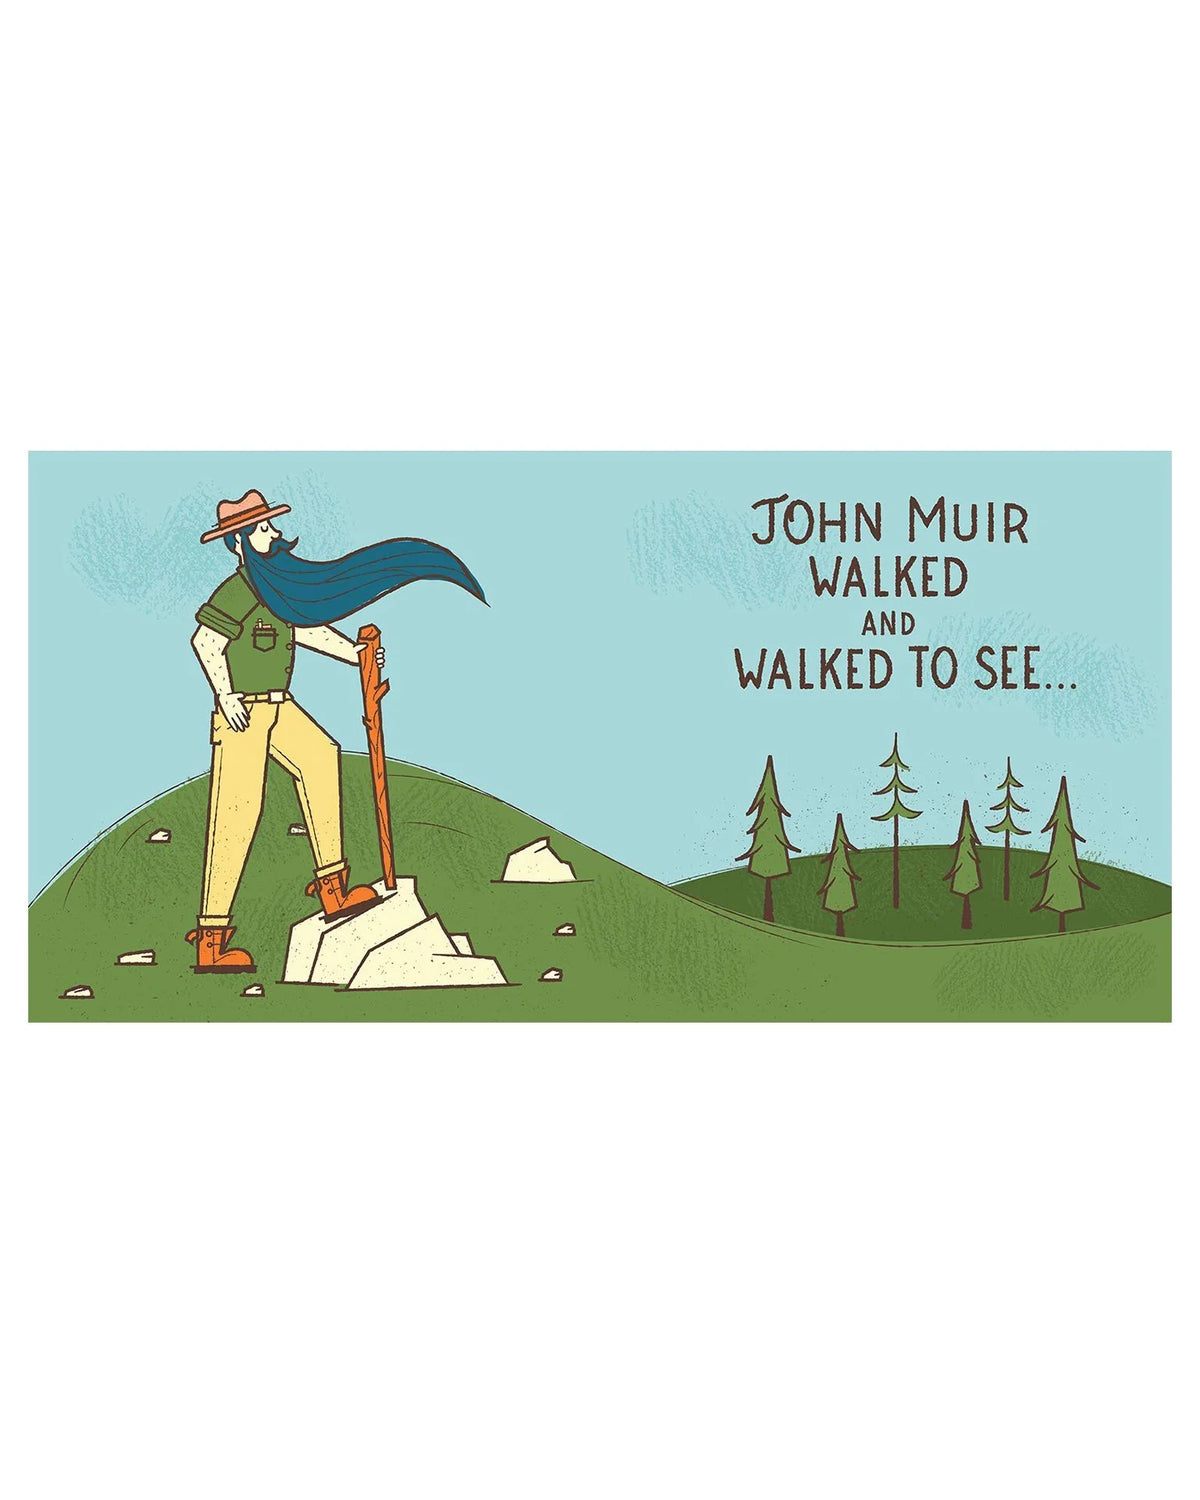 Little Naturalists: The Adventures of John Muir